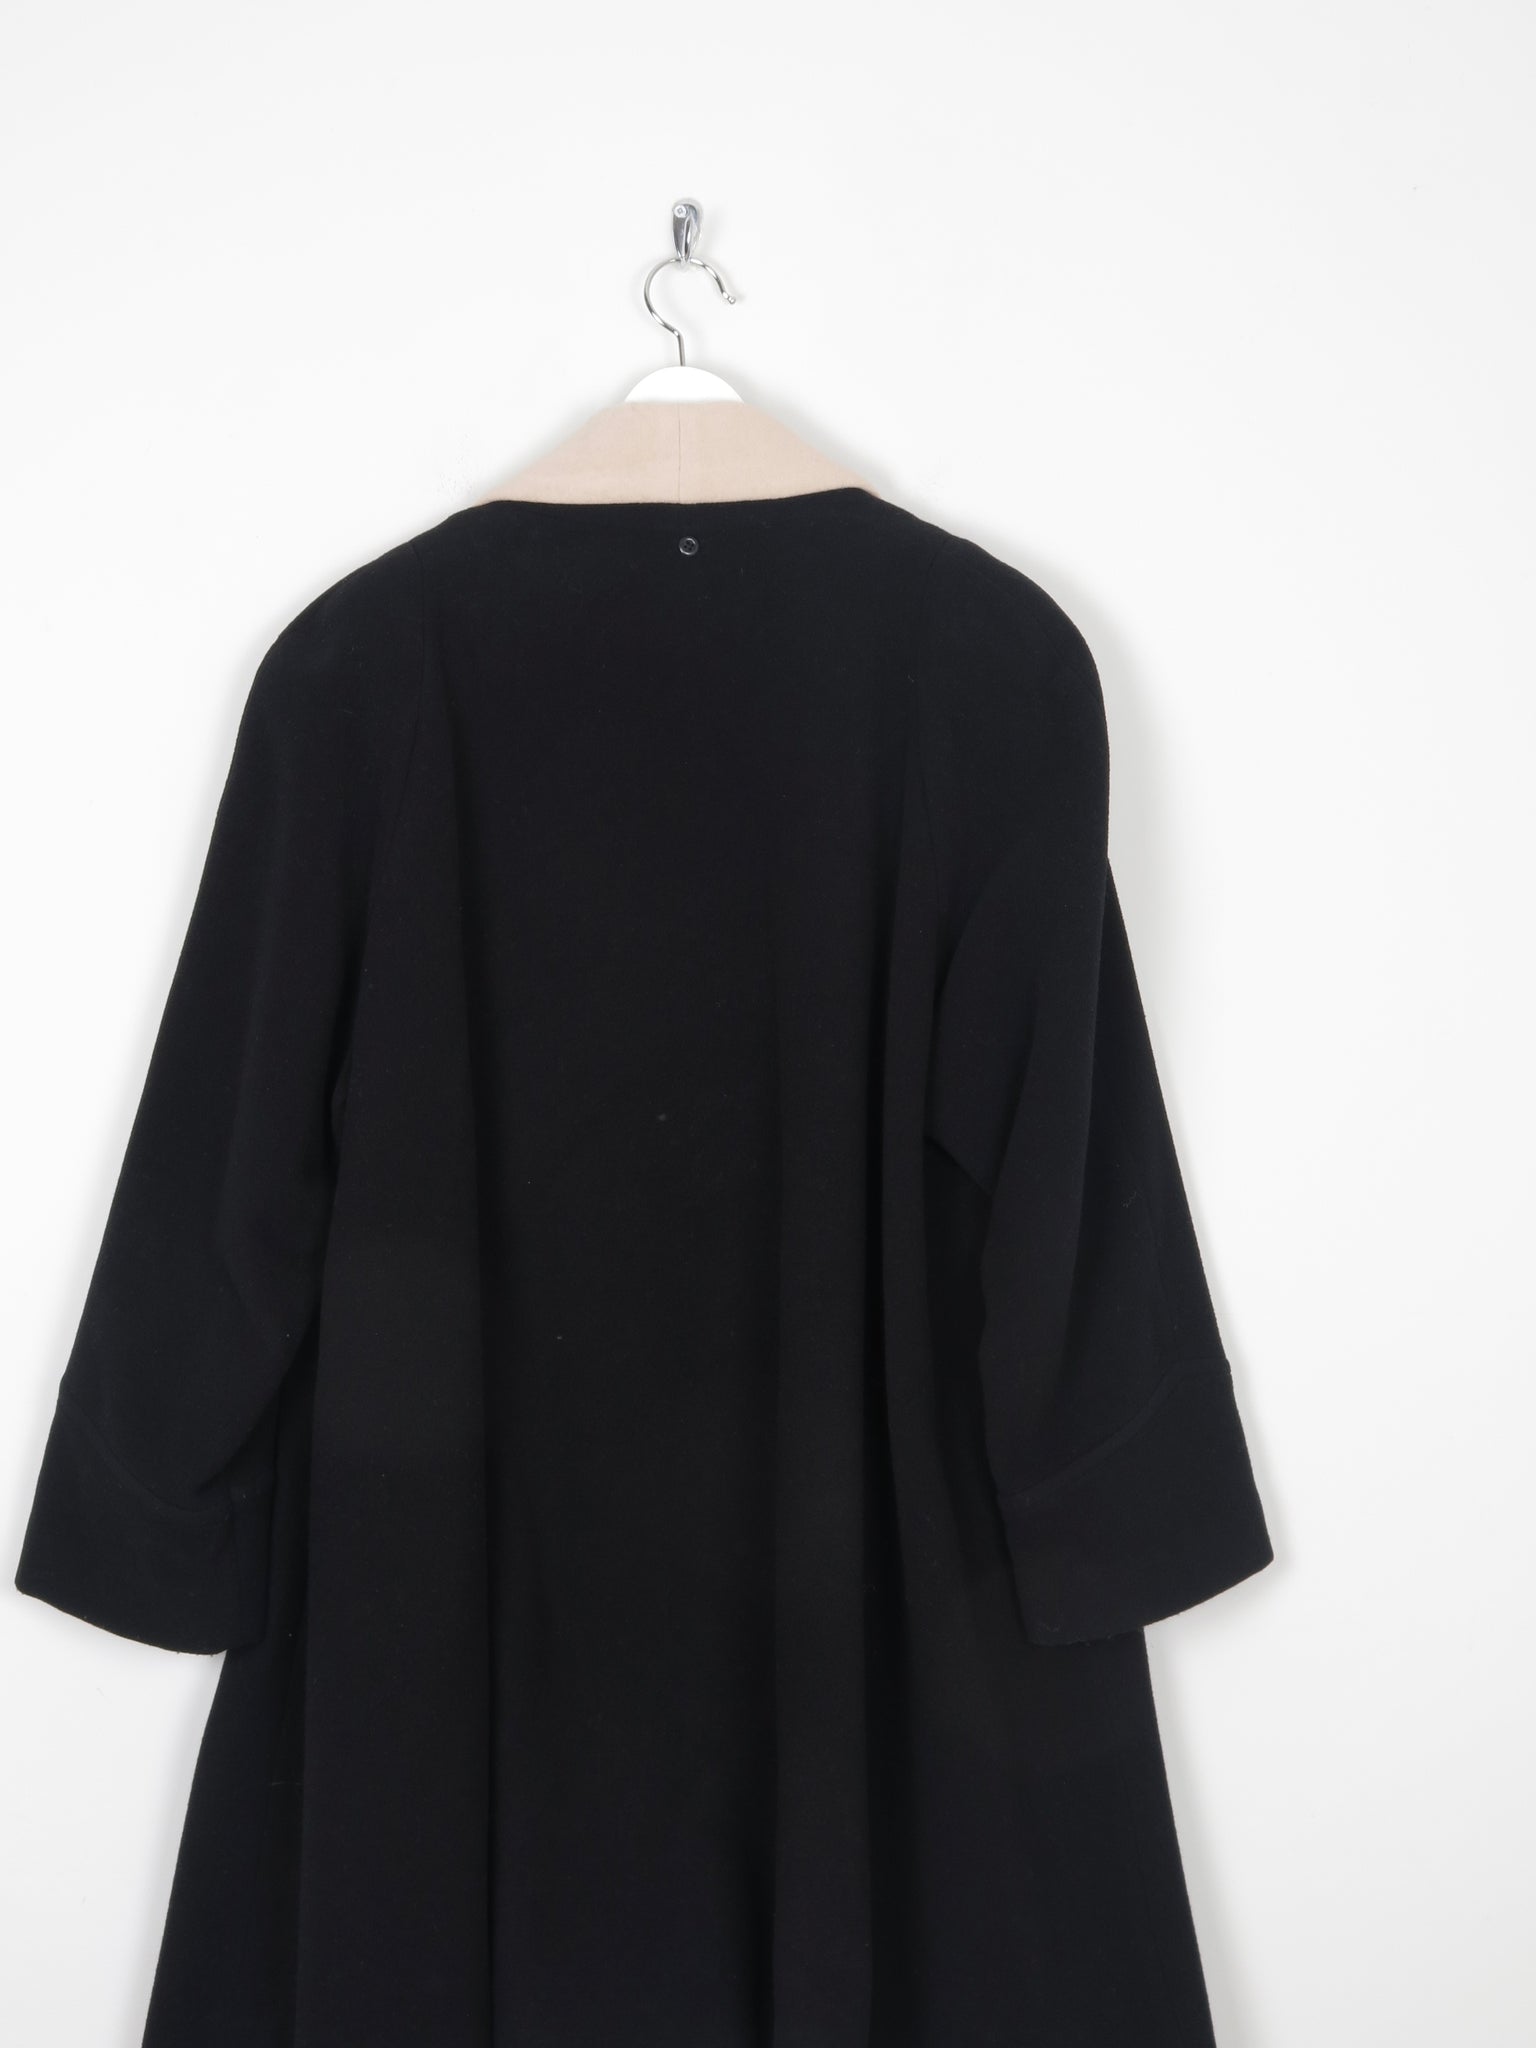 French Black & Cream Black Wool Swing Coat S-L